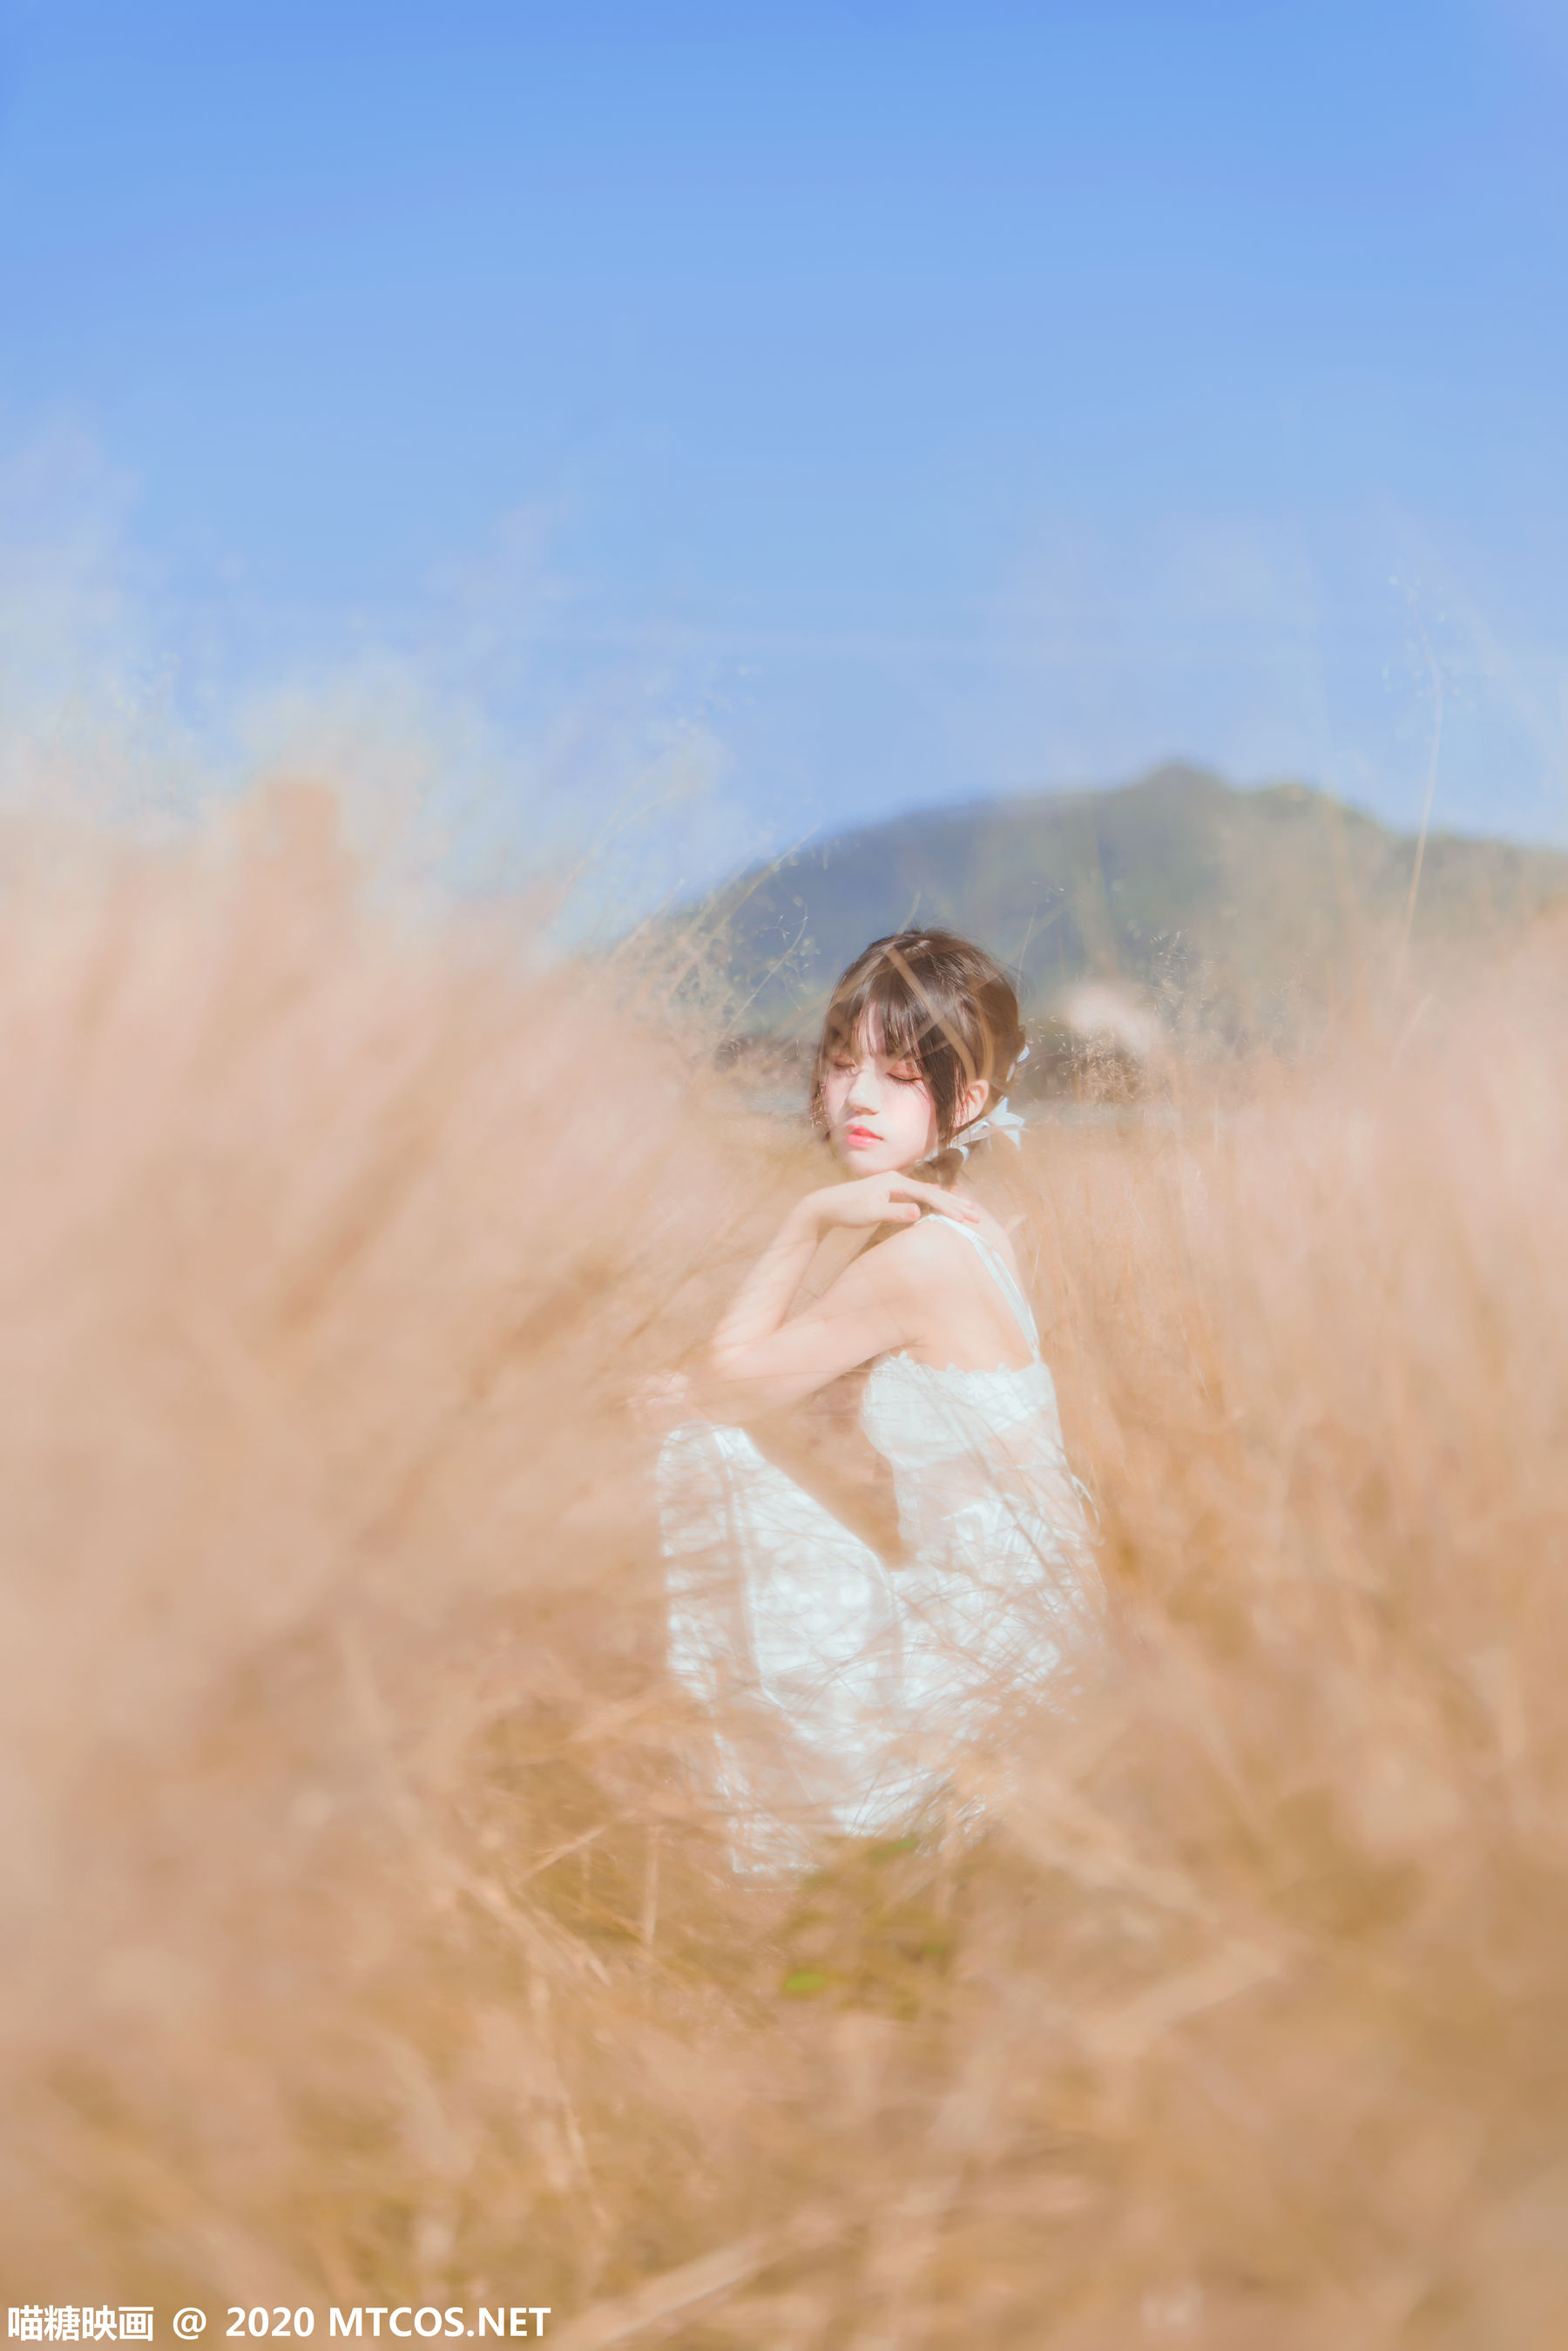 [糖] Vol.224 “Late Autumn Wilderness” Photo Album